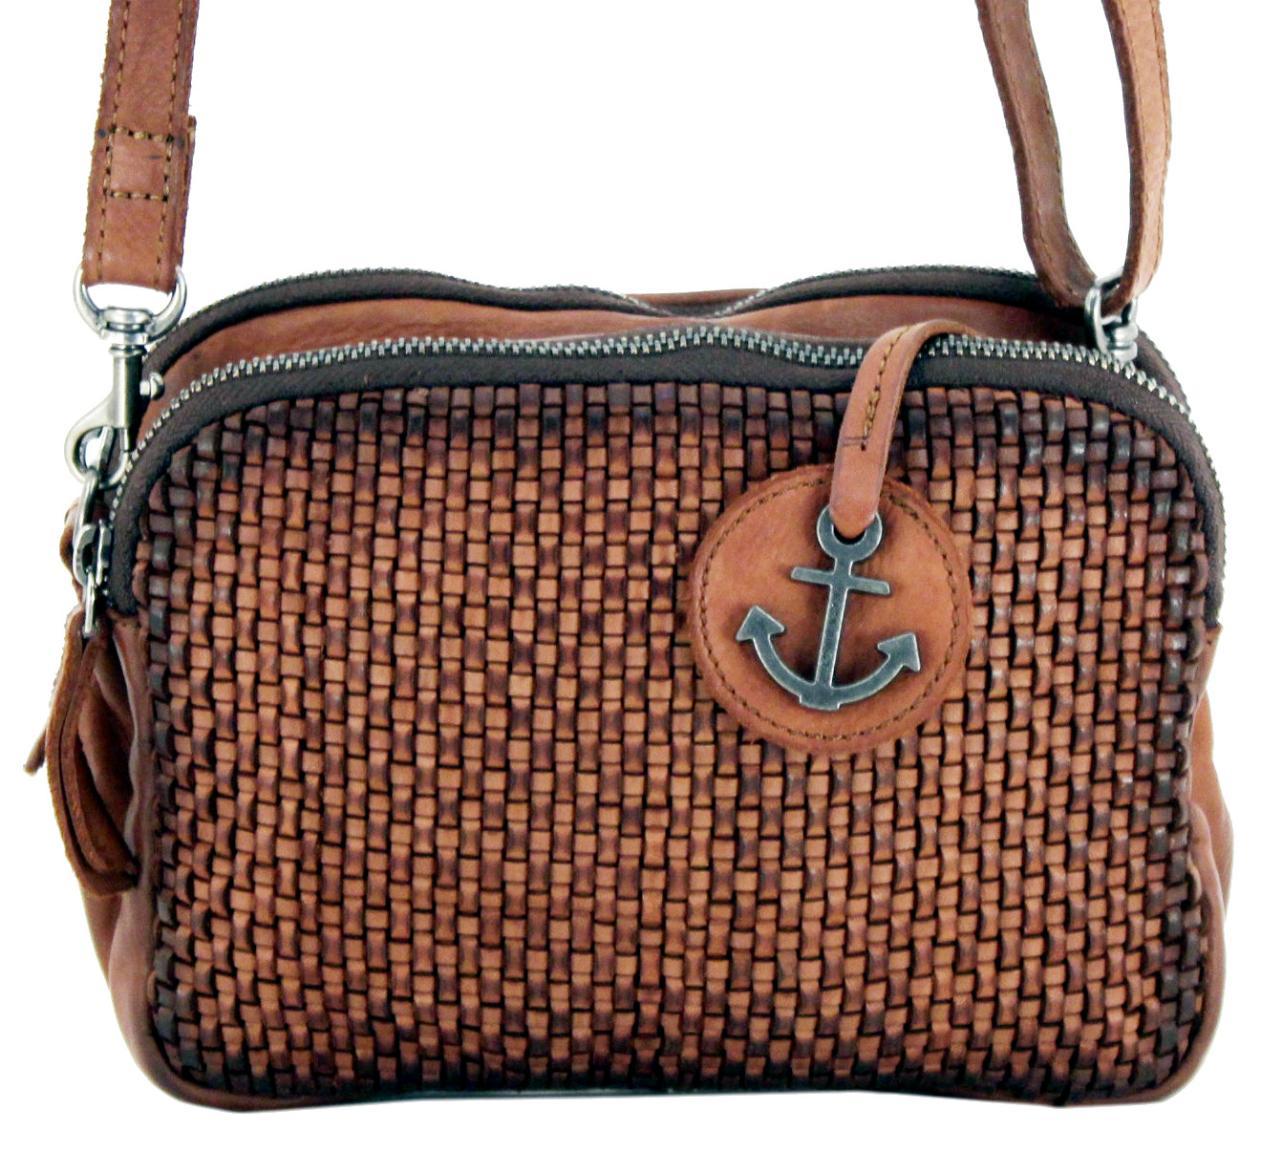 Vintage Leatherbag Rena Soft Weaving Harbour2nd Cognac Flechtung